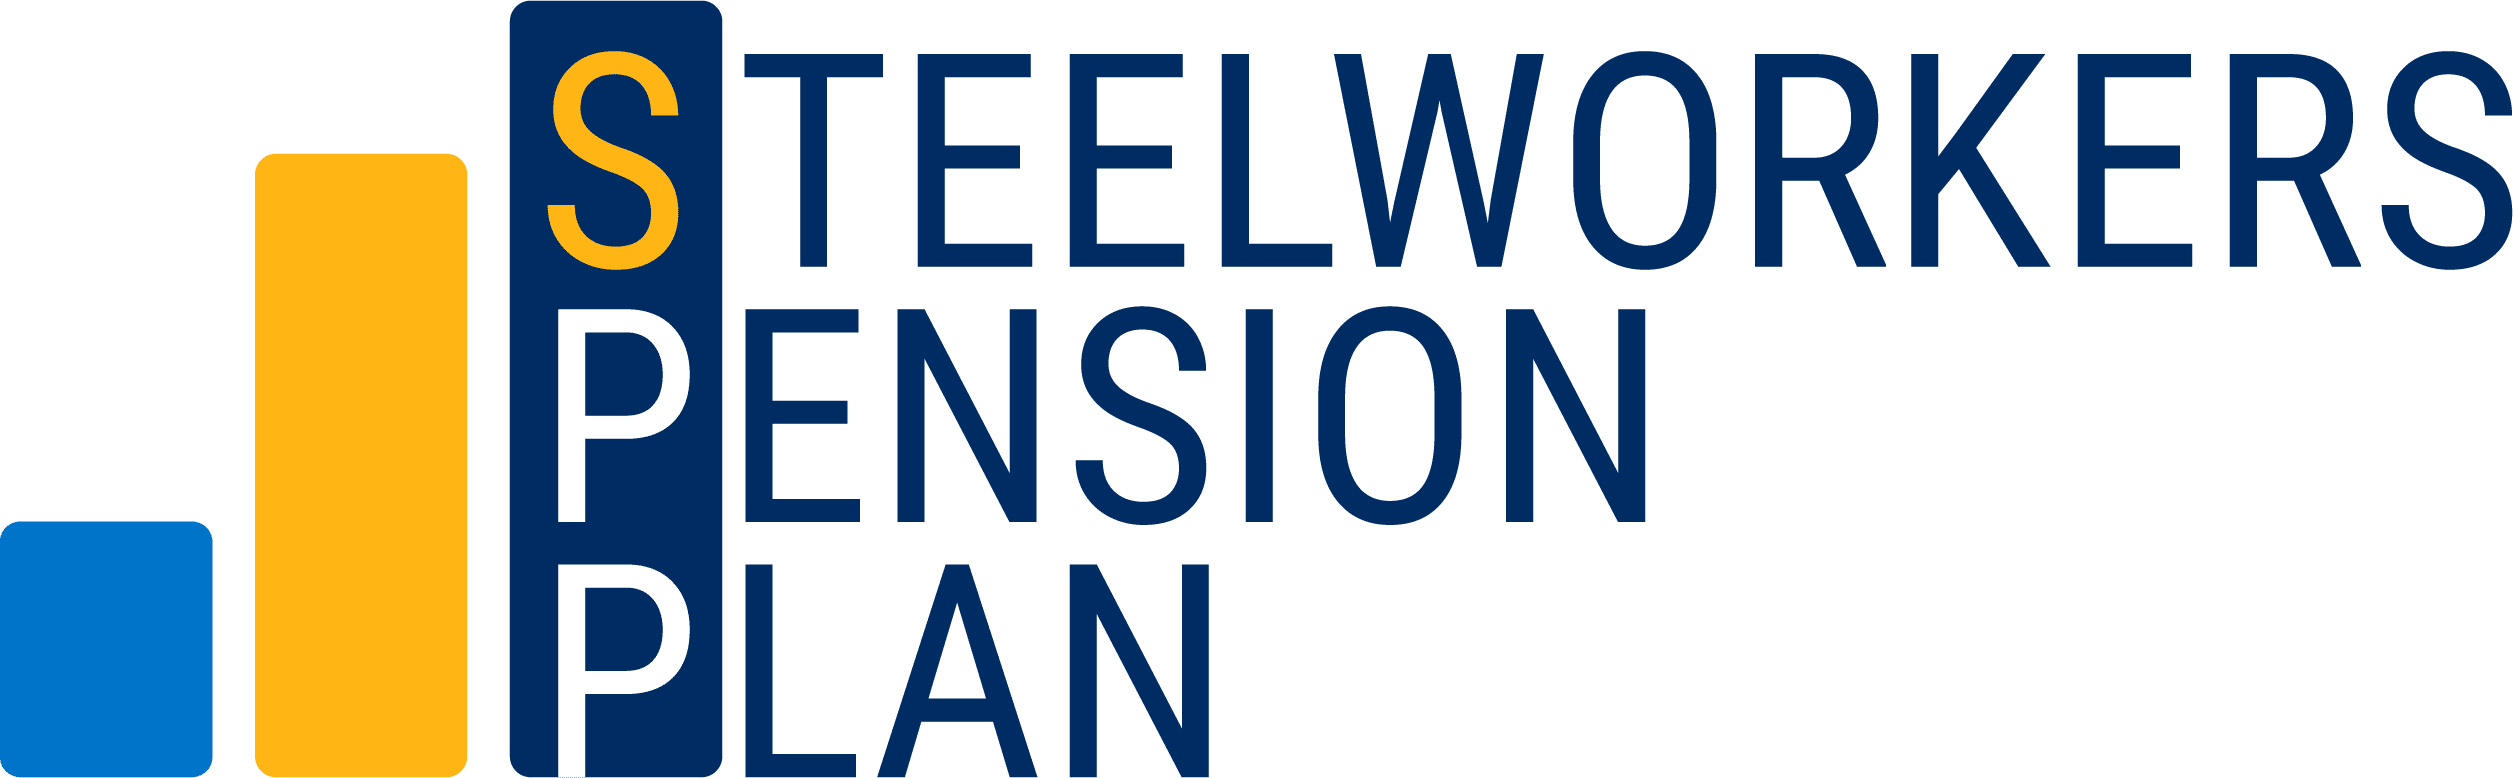 Steelworkers Pension Plan